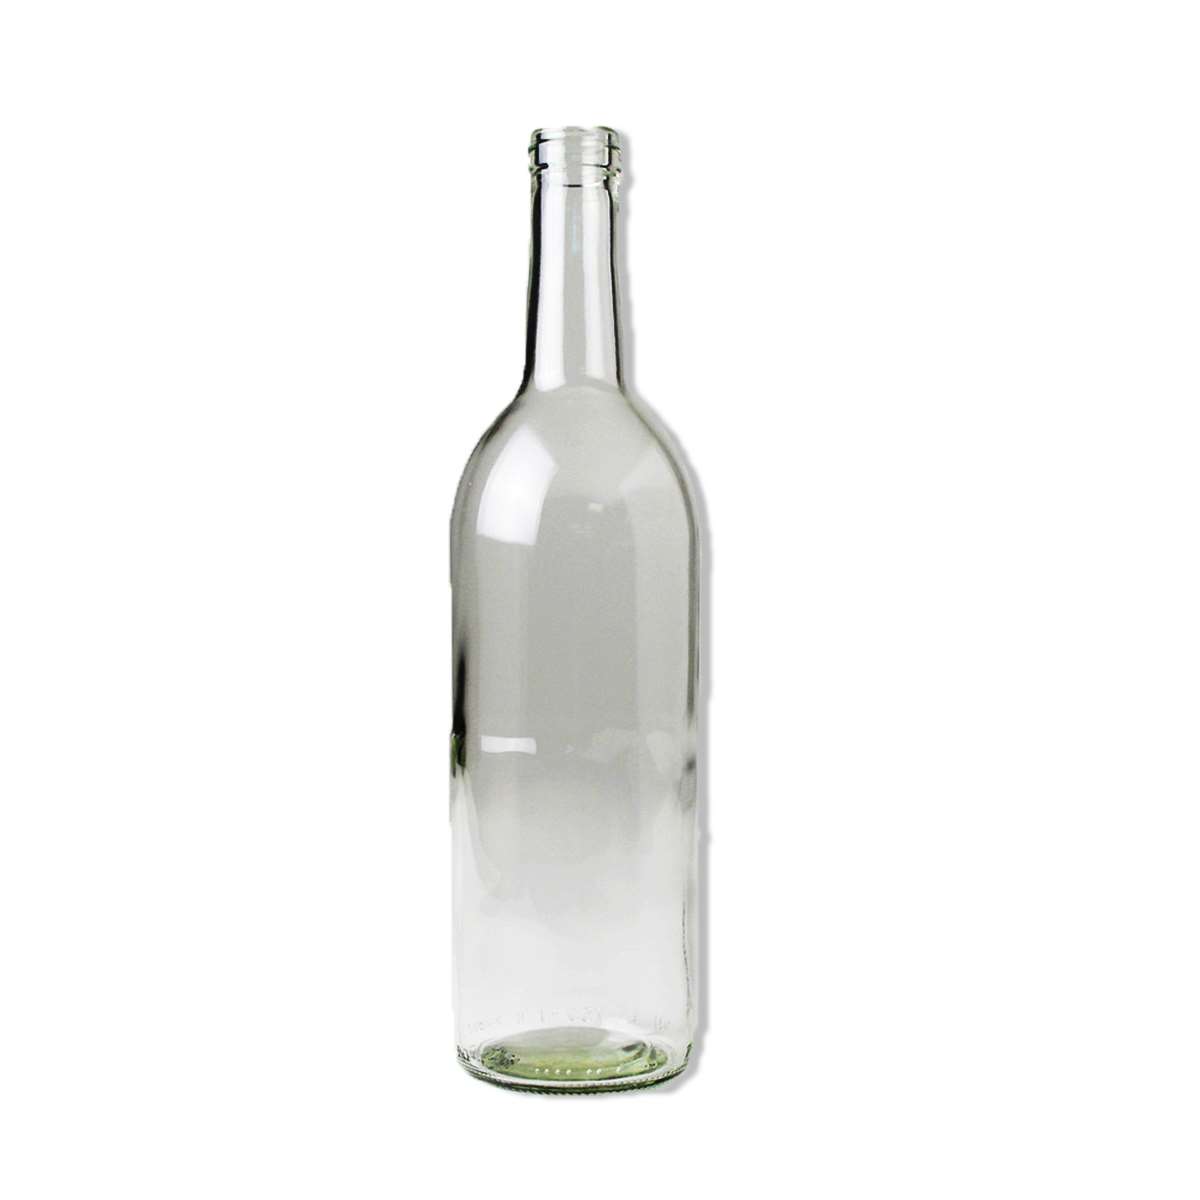 Пустая бутылка вина. Стеклянная бутылка. Пустая бутылка. Бутылка jpg. Стеклянная бутылка сбоку.